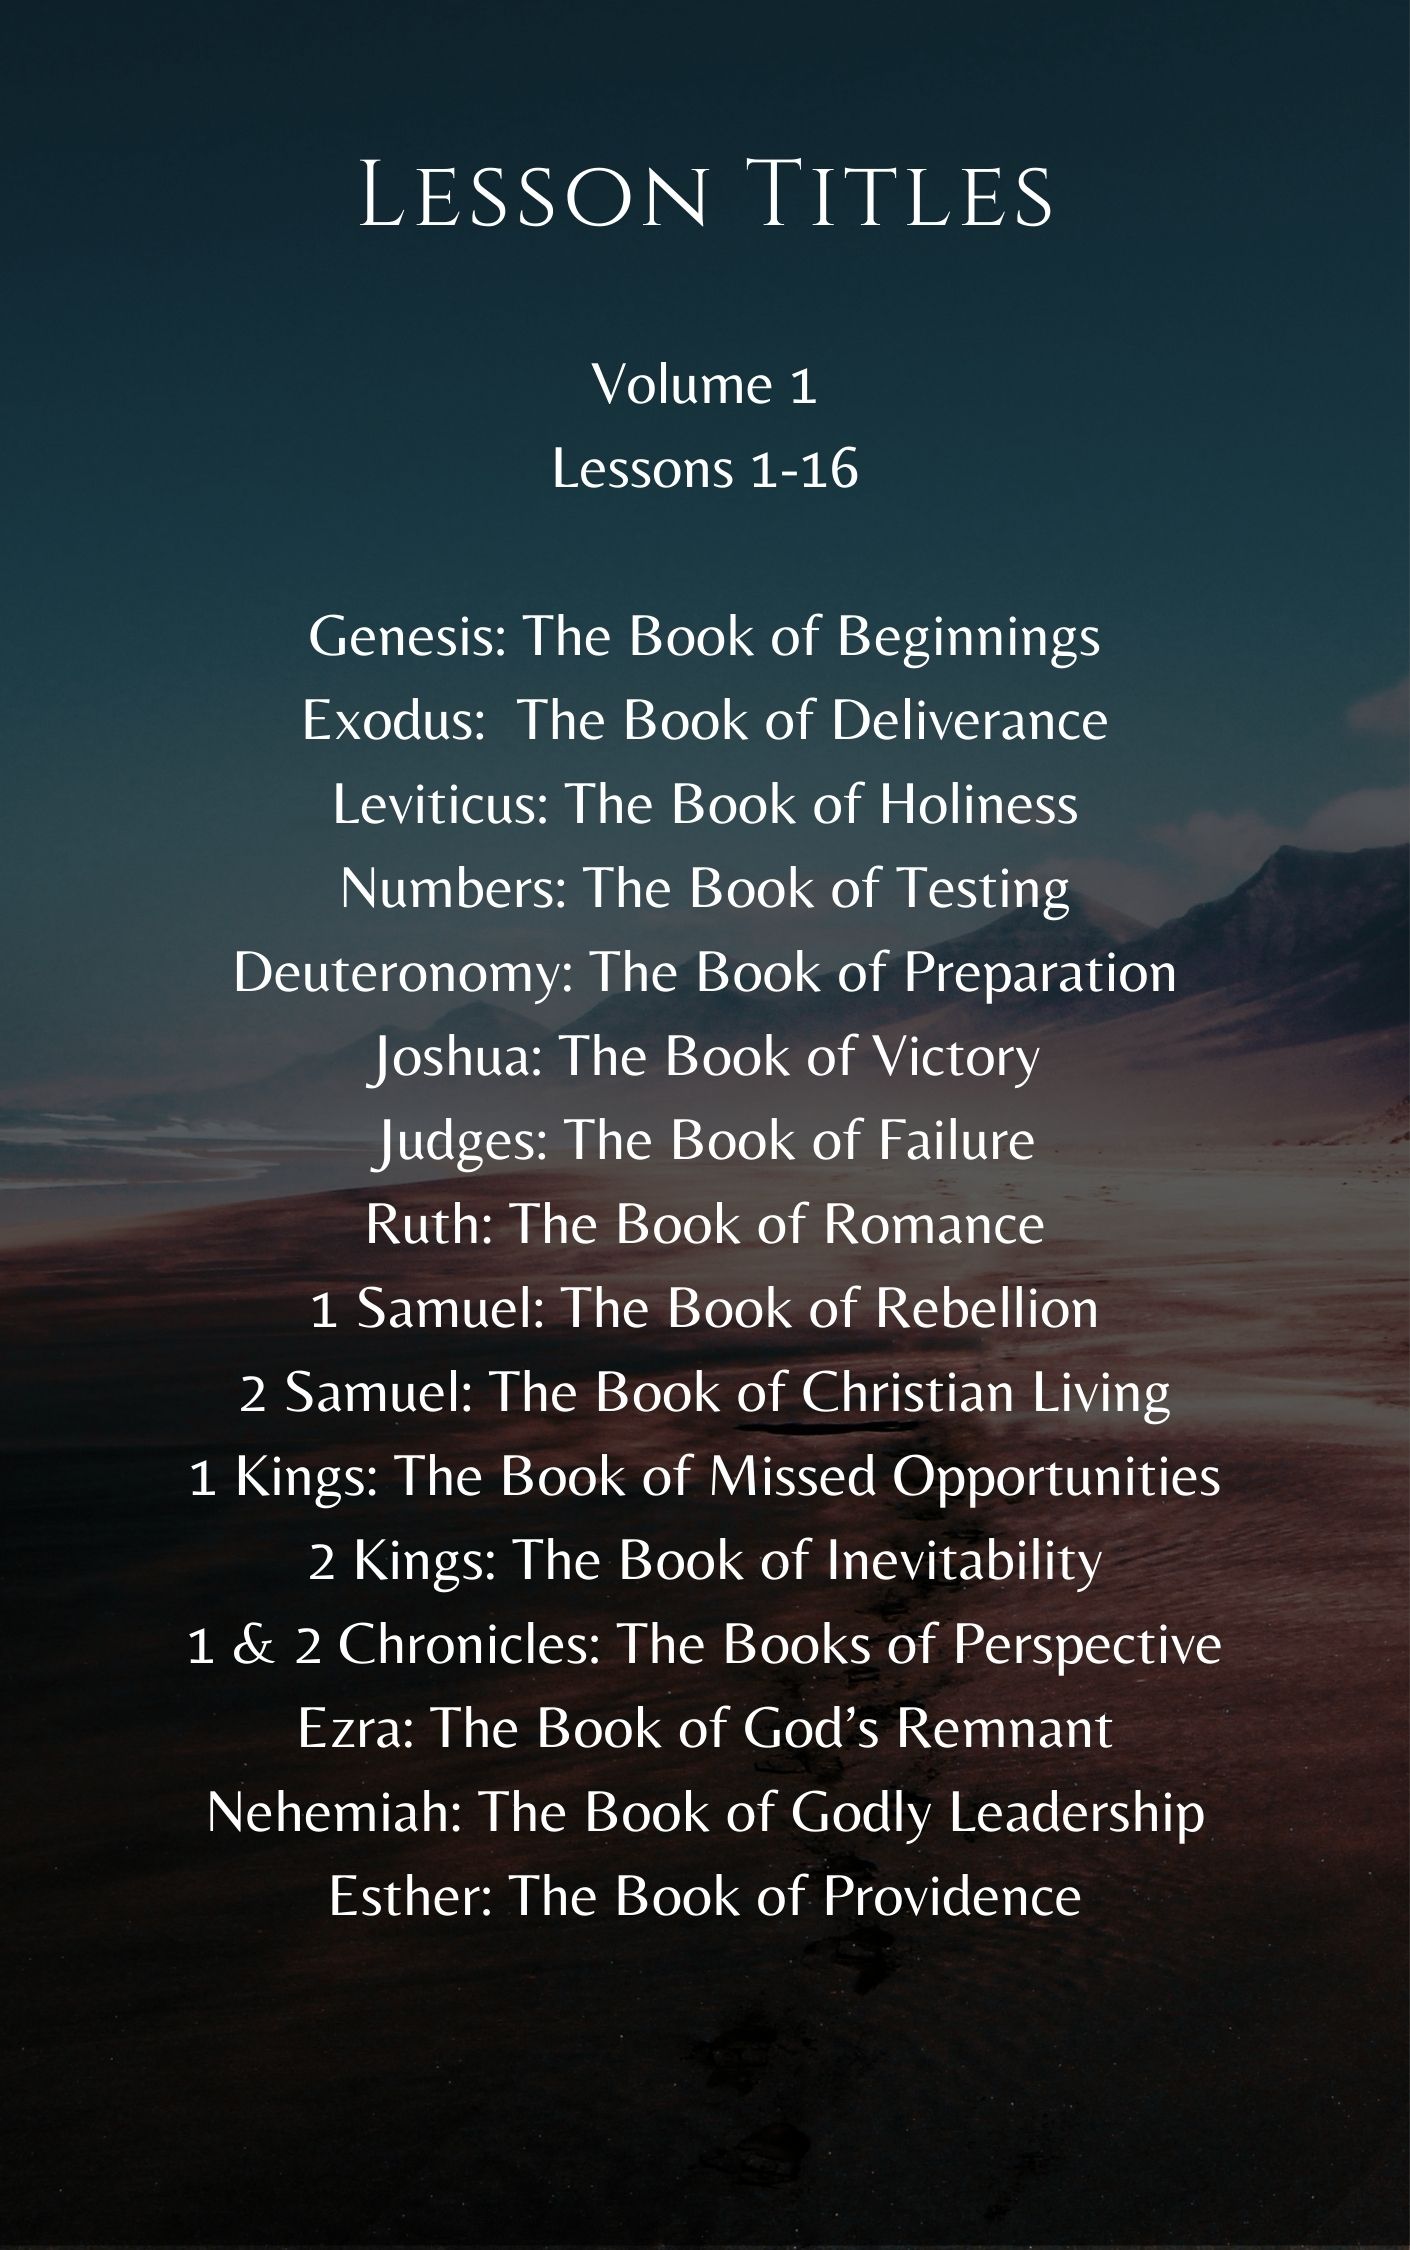 Journey through the Bible – Volume 1